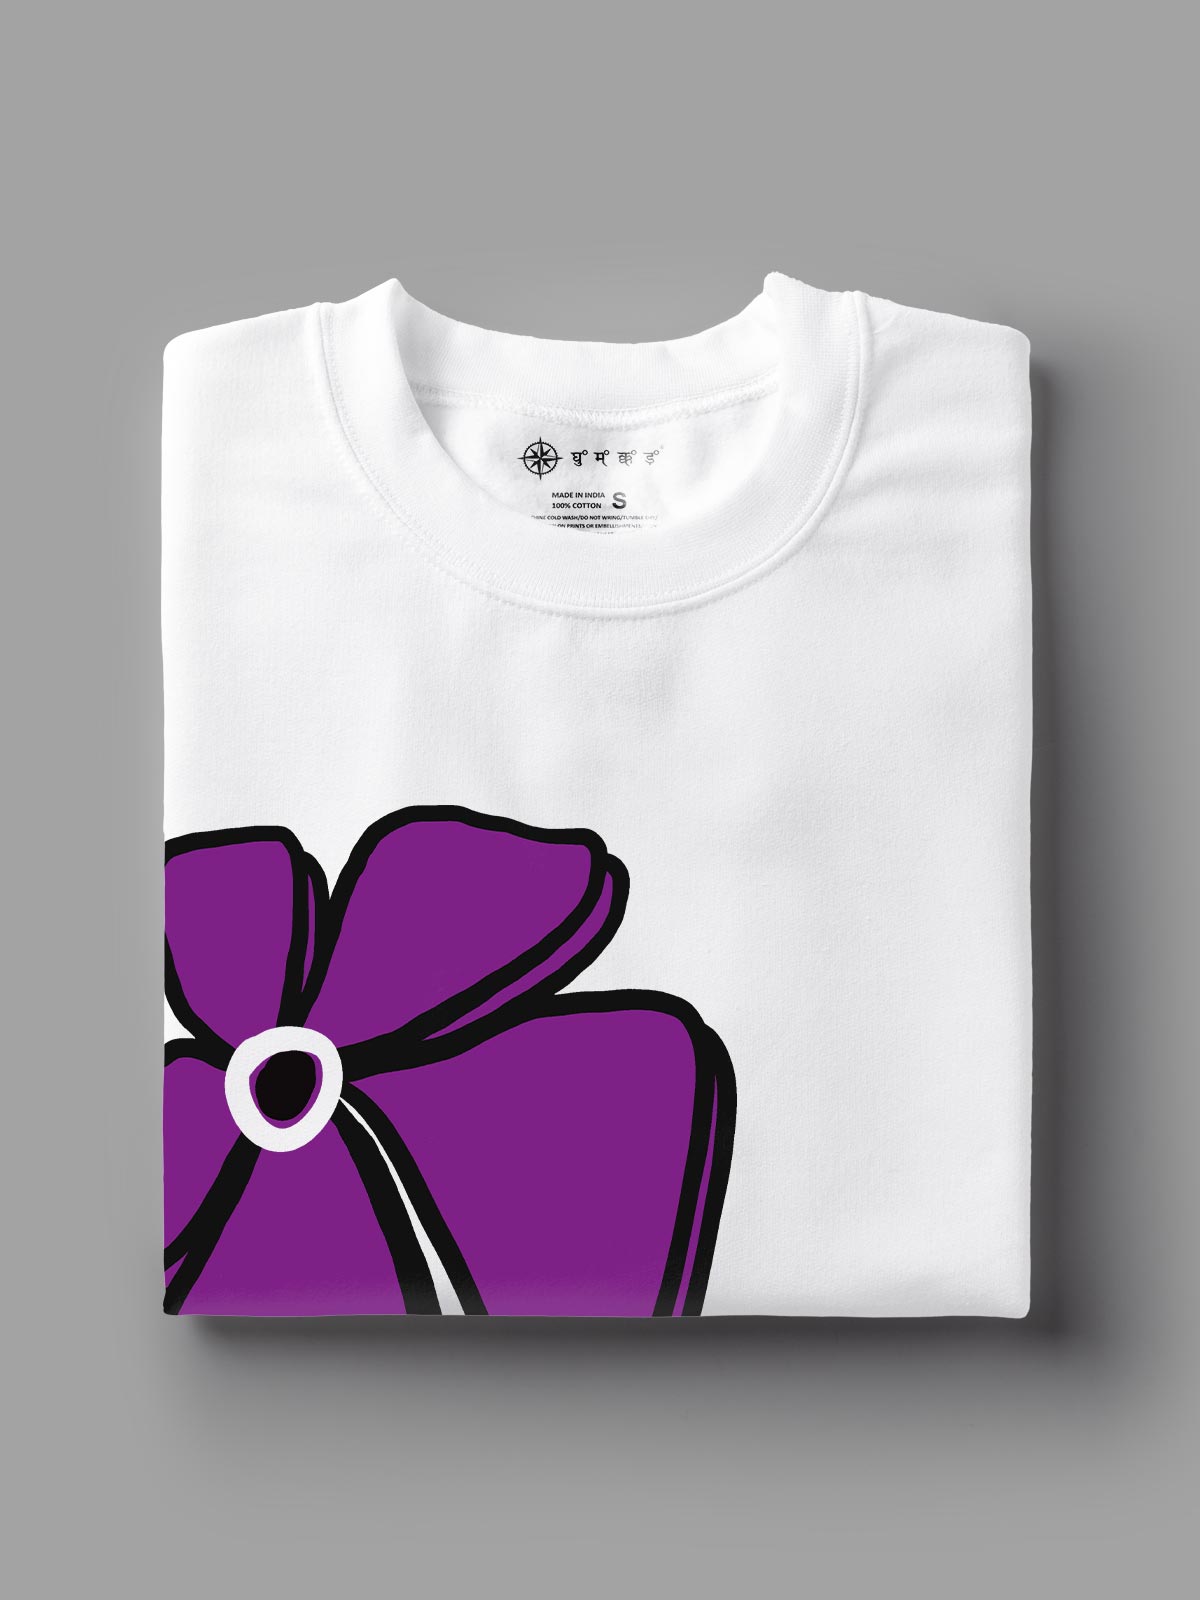 Stylish-wisdom-printed-t-shirt-for-men by Ghumakkad